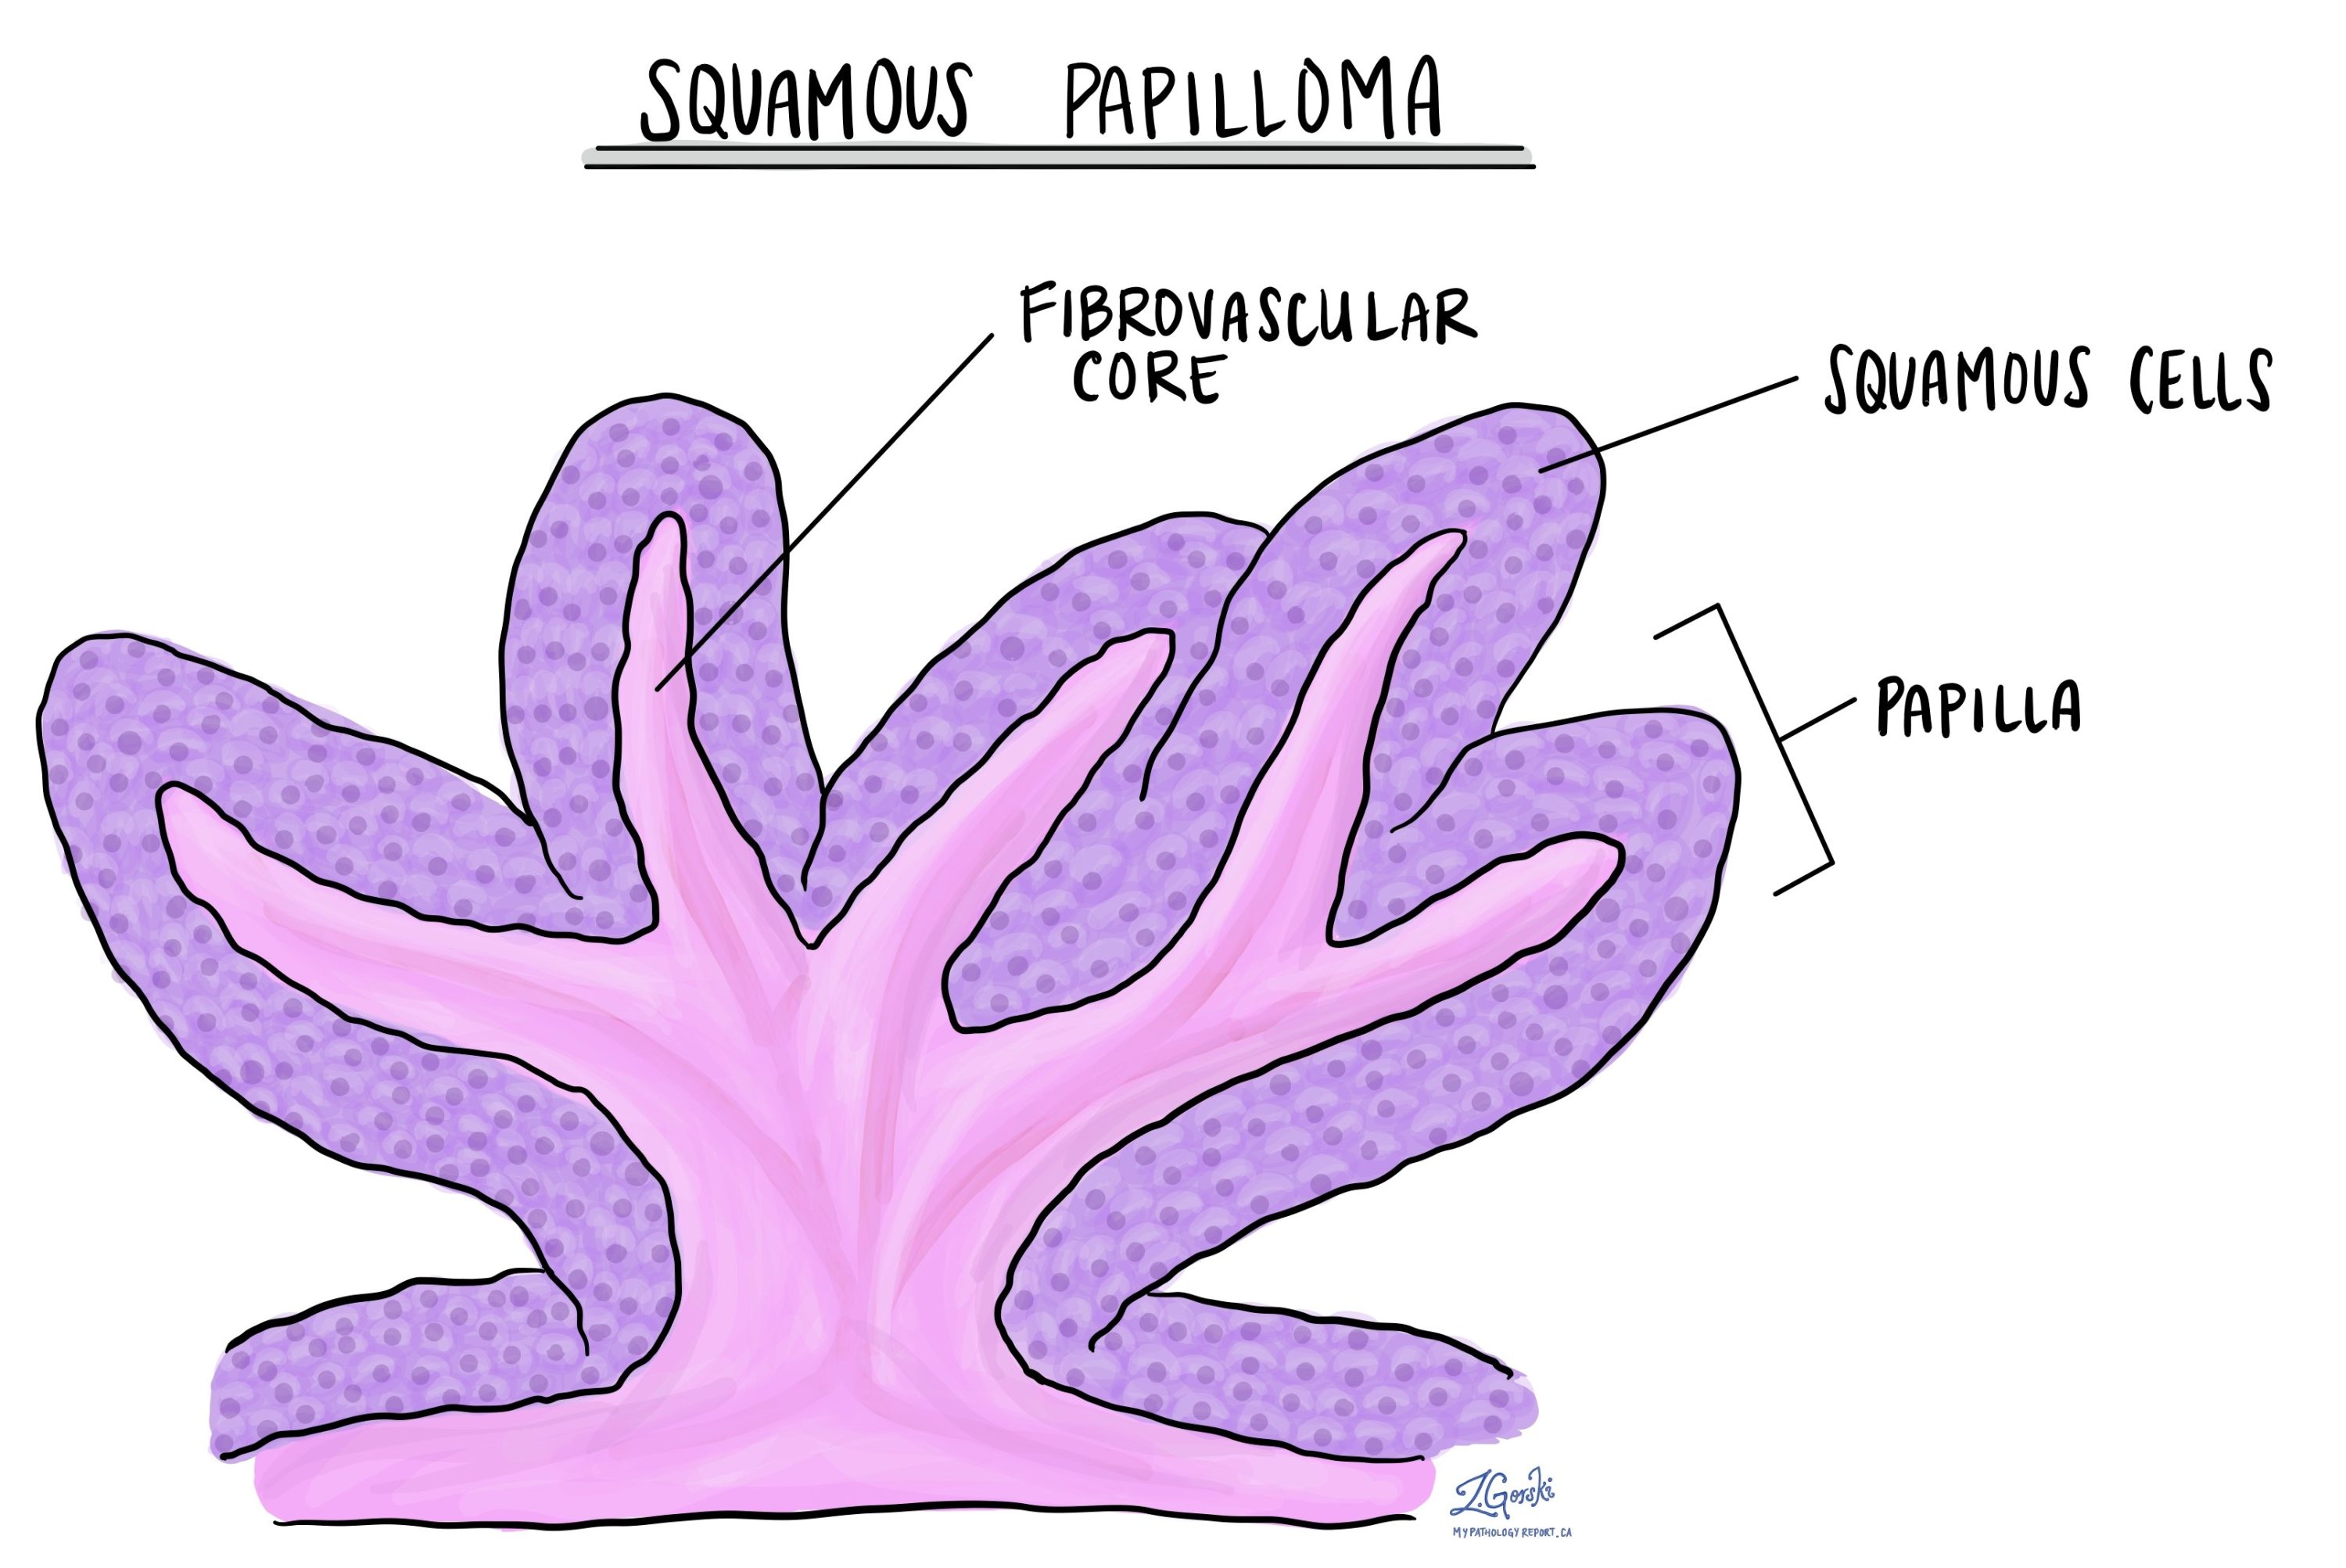 will squamous papilloma go away